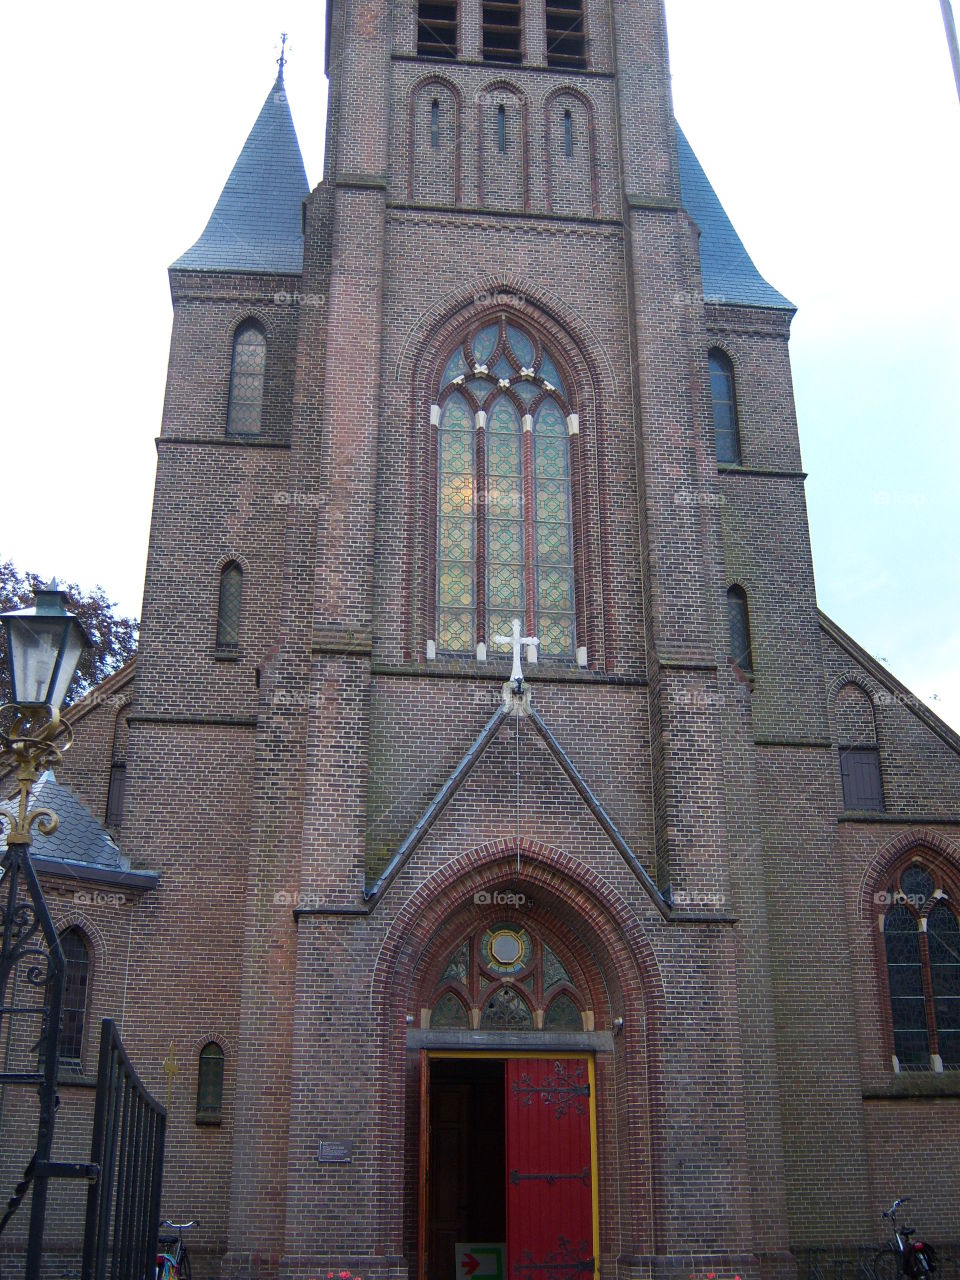 Typical church 